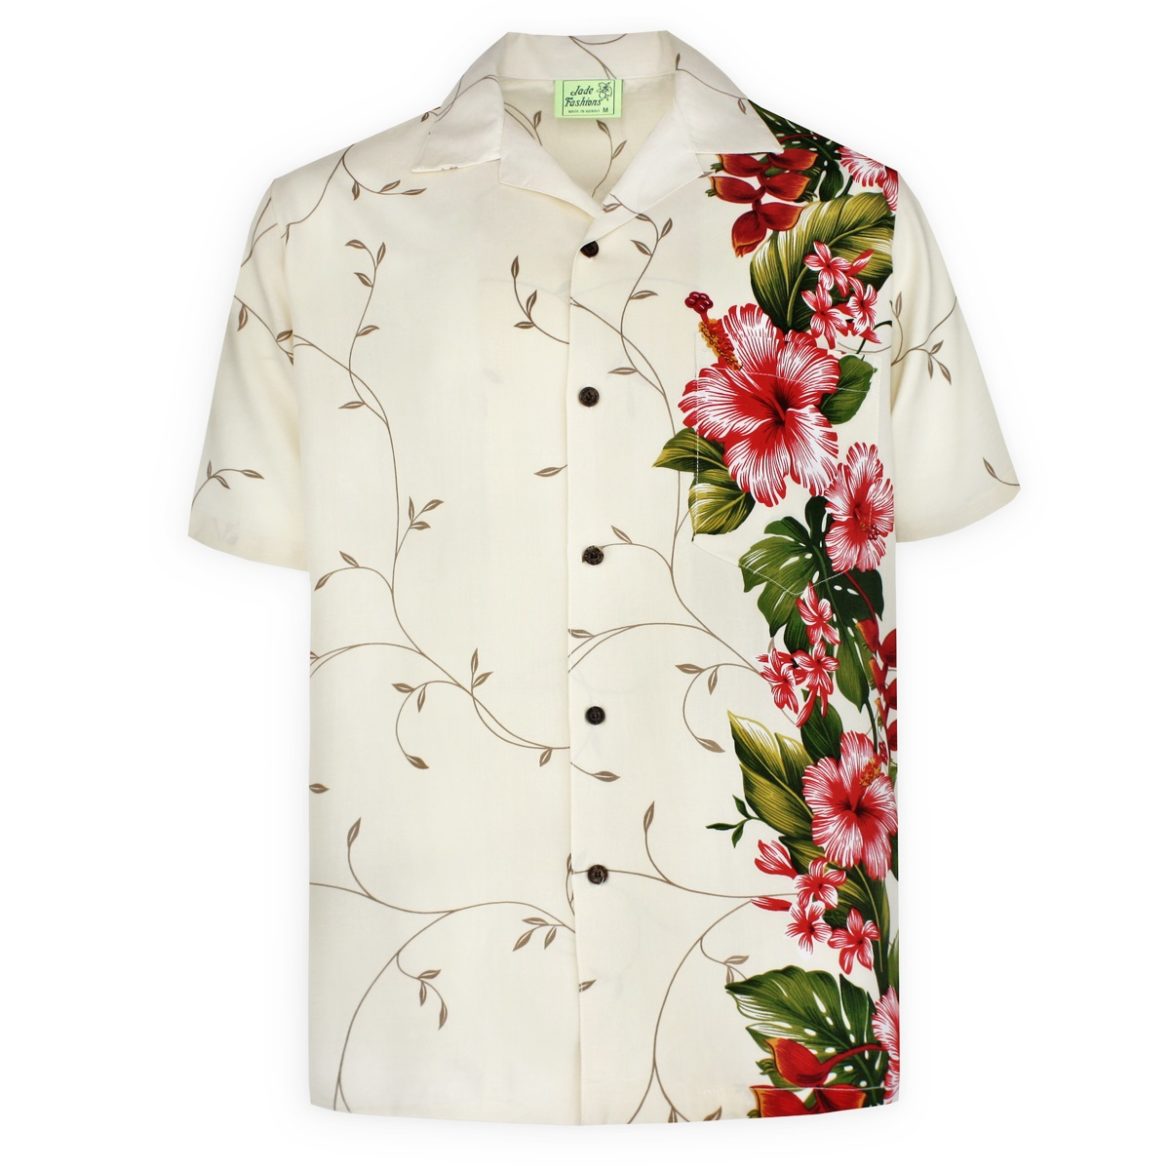 Mens Hawaiian Shirt - Paradise Garden Cream - Front View